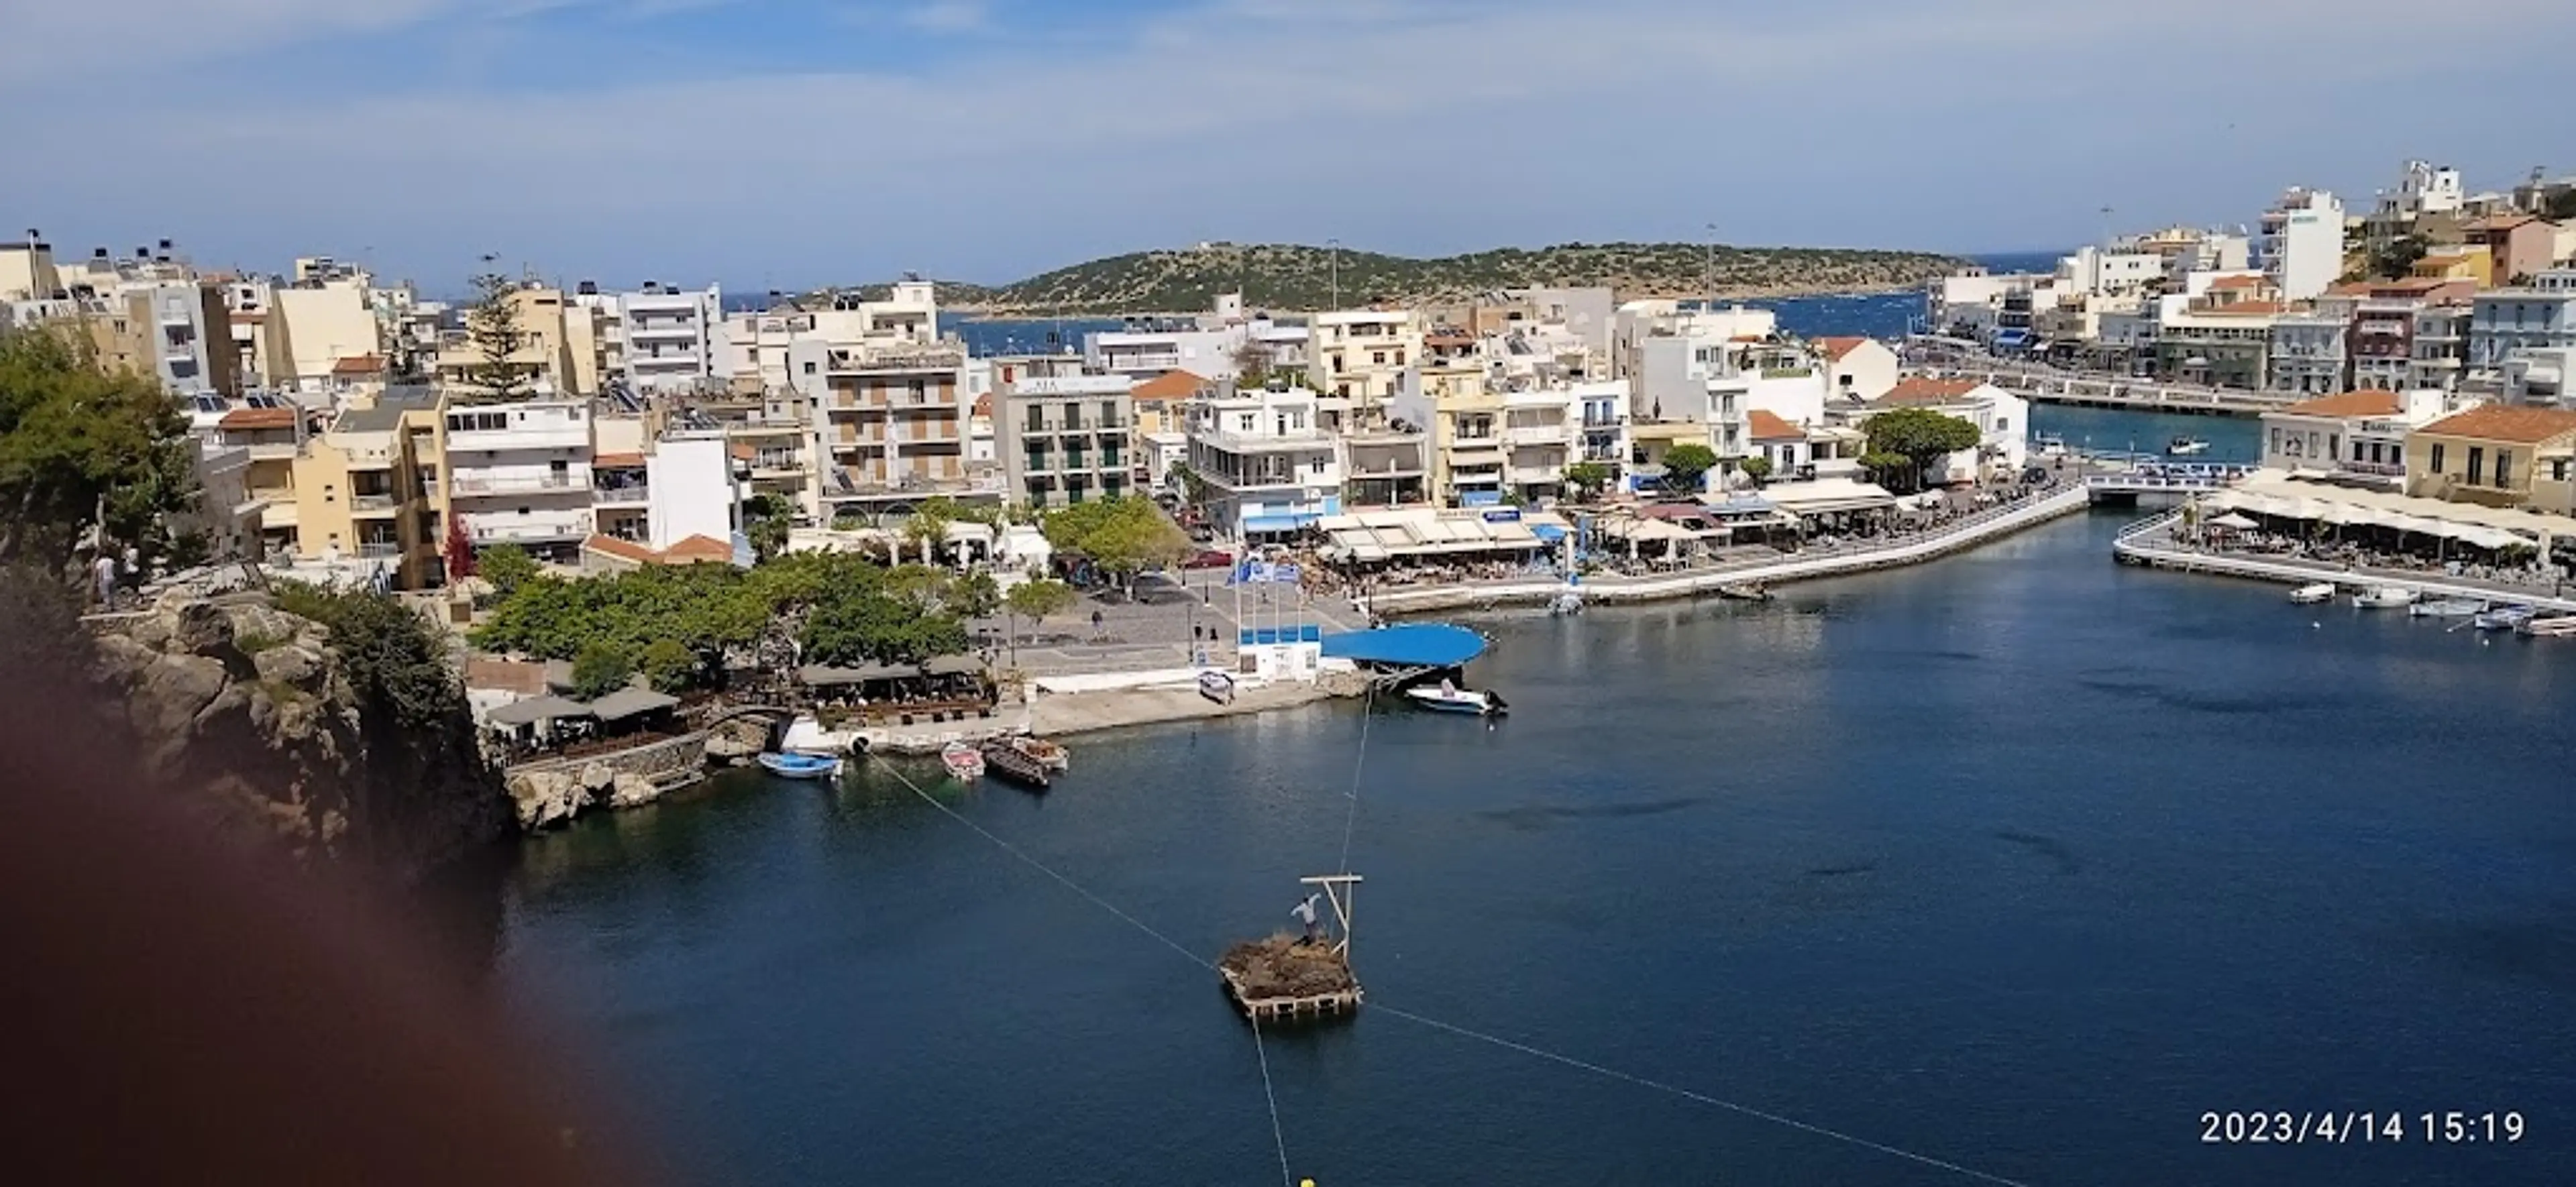 Agios Nikolaos' lake and marina